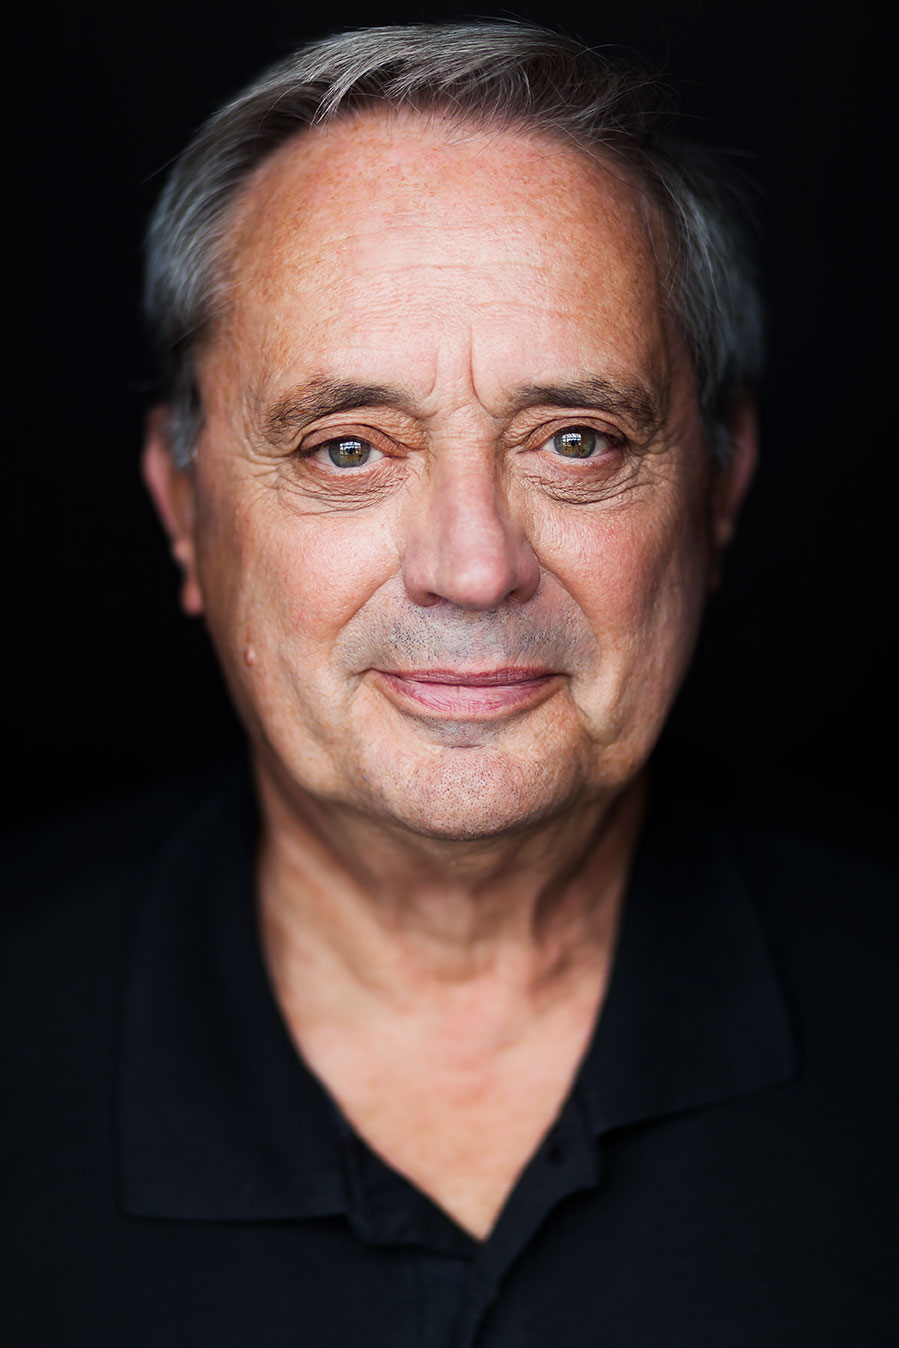 Casting photo of Robert Daviau by Marili Clark Photographer.